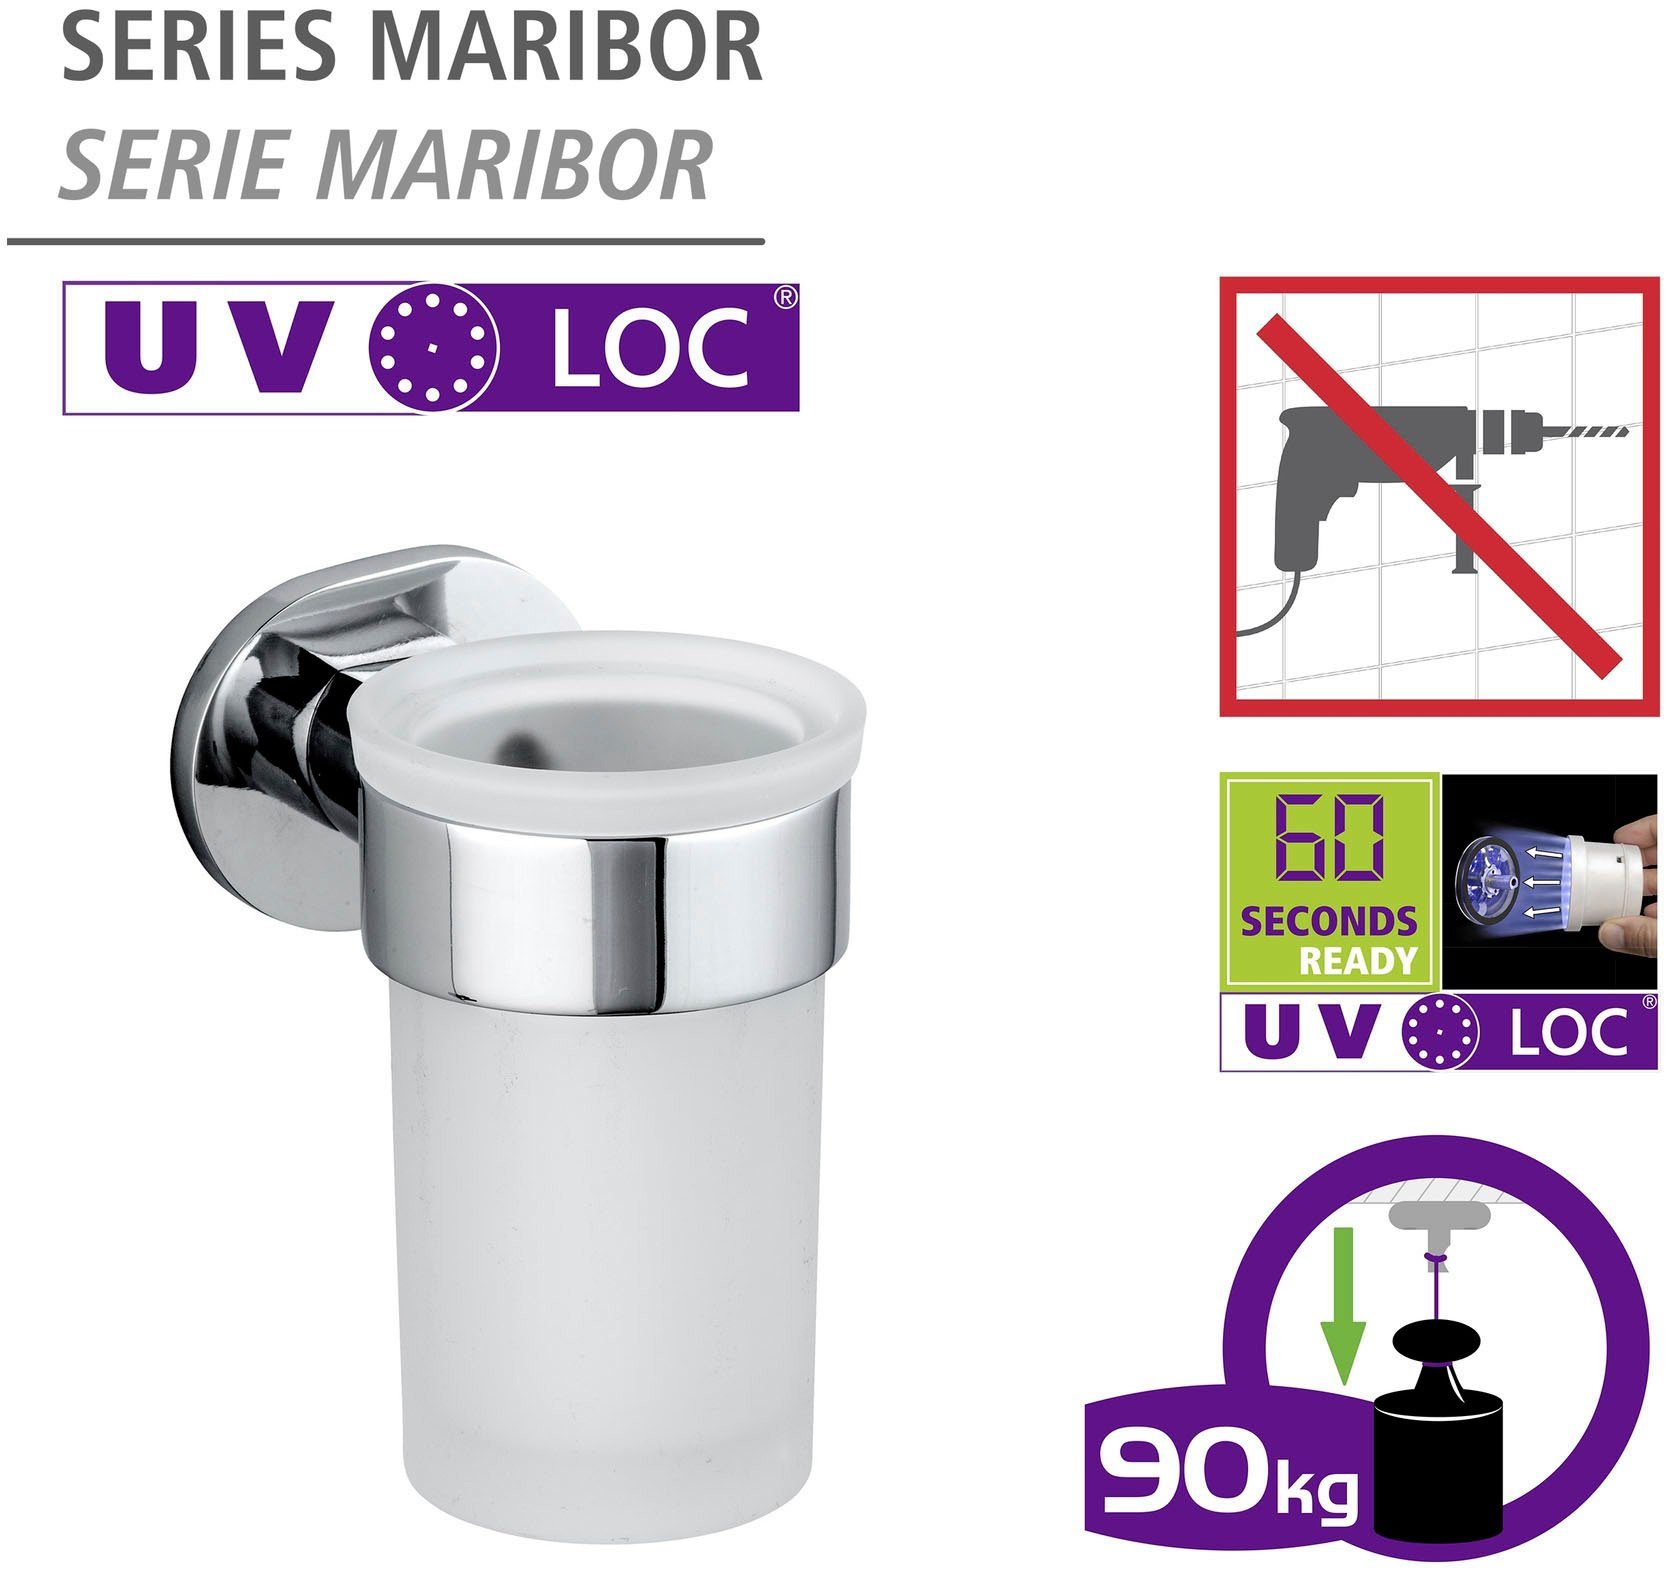 WENKO Zahnputzbecher Klebesystem UV-Loc® befestigen Bohren innovativem ohne Maribor, mit